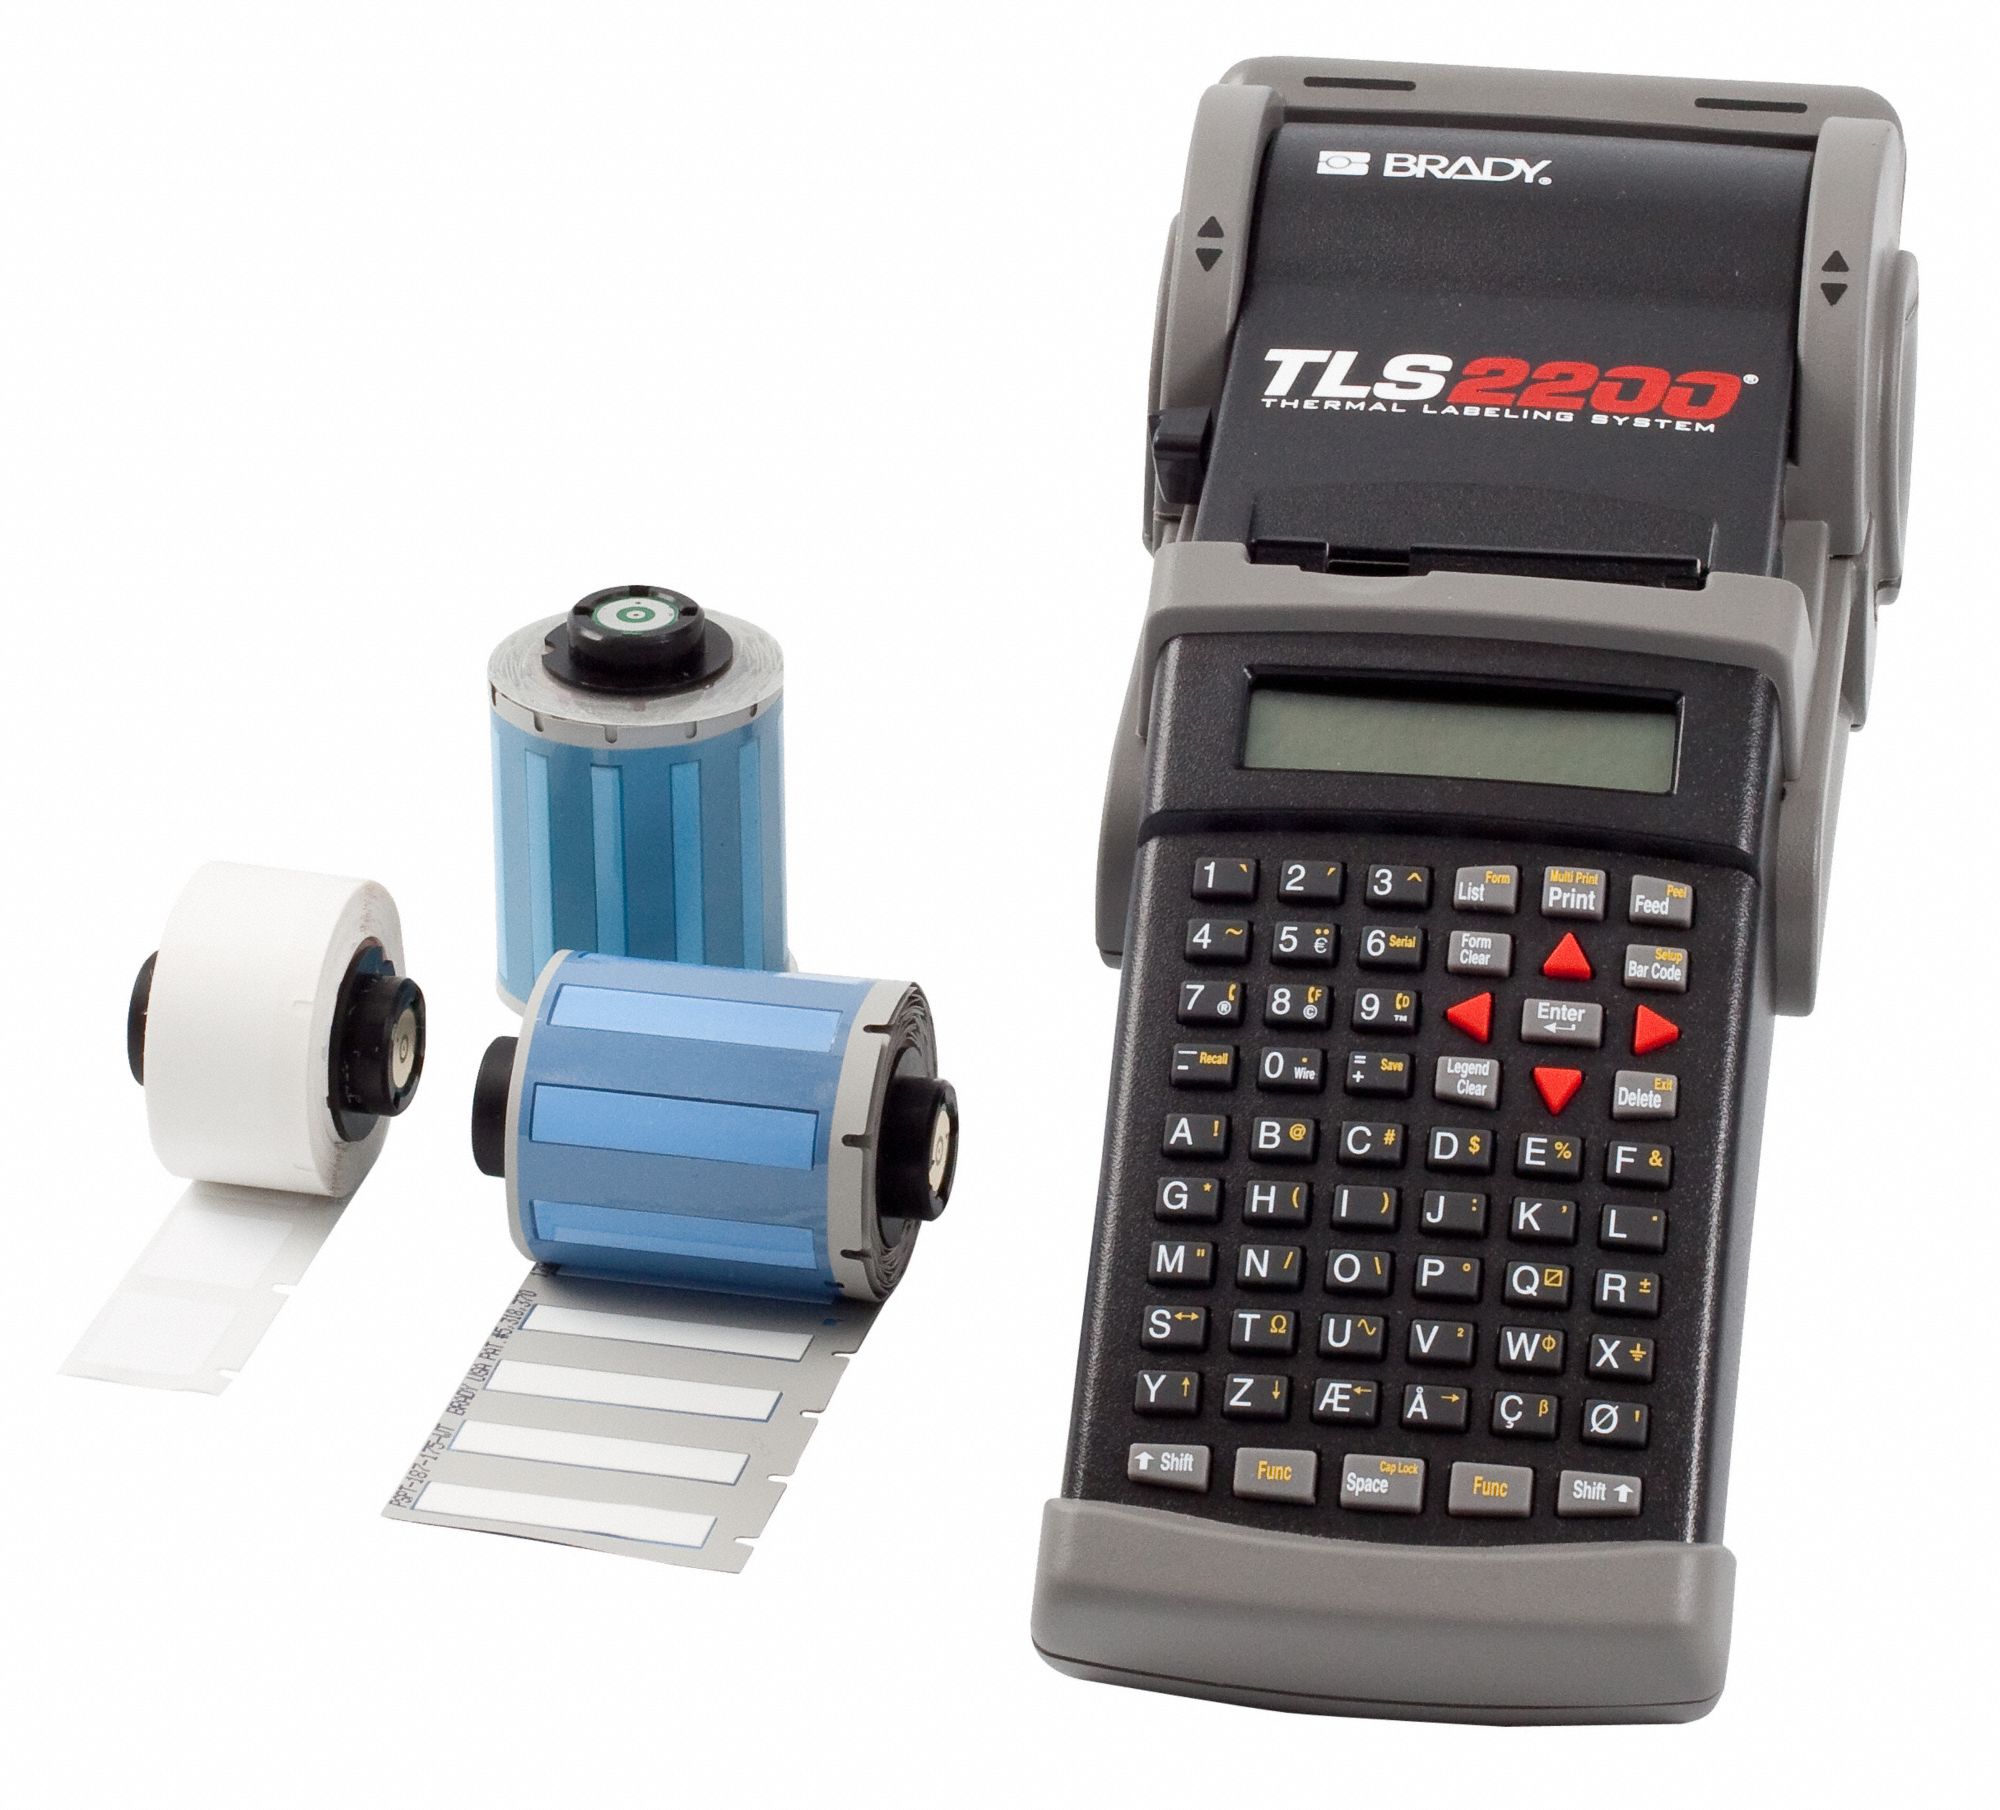 Black BRADY TLS2200 Thermal Printer Ribbon Cartridge *R4310* 